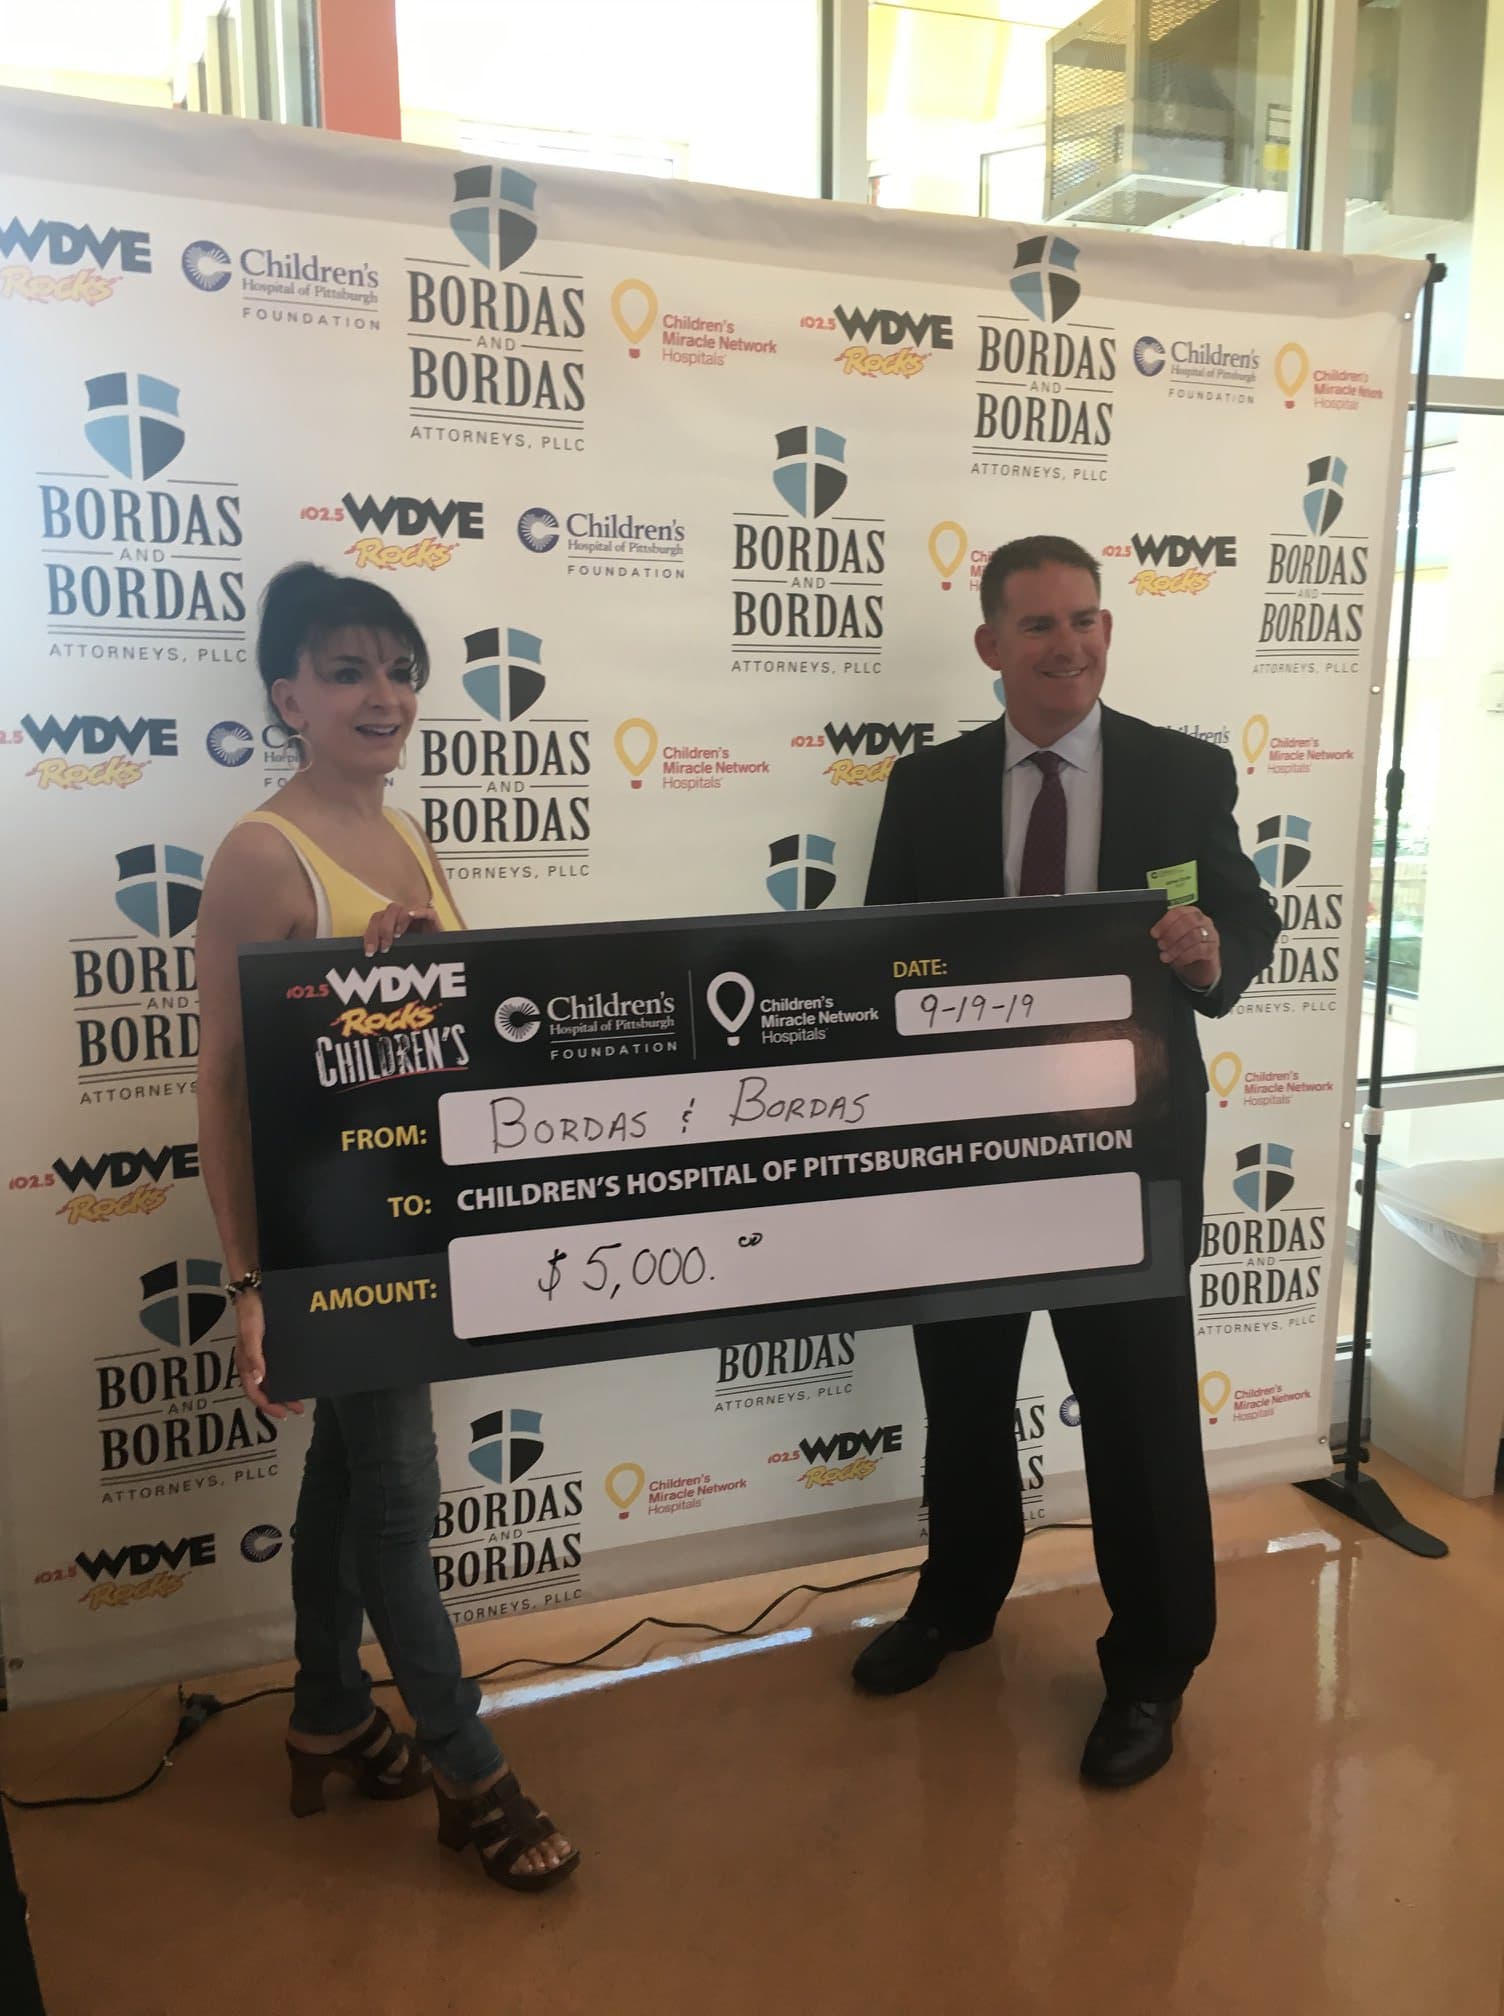 Bordas & Bordas Donates $5,000 to Childrens Hospital of Pittsburgh Foundation 2019